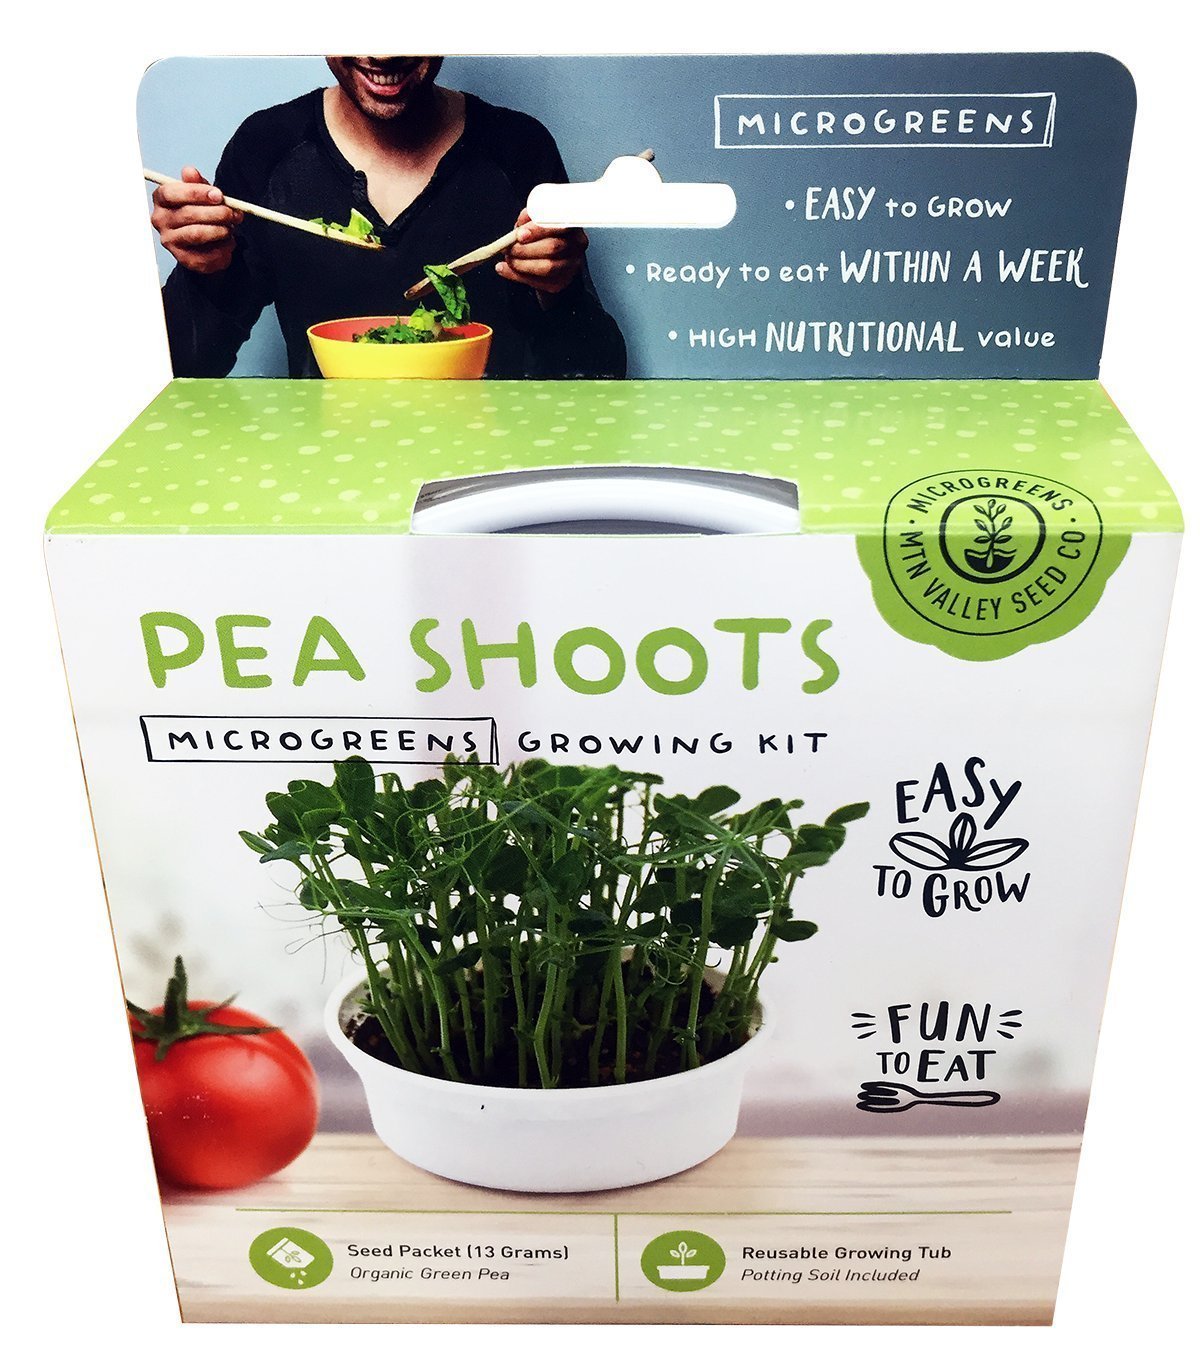 Mini Microgreens Growing Kit - Pea Shoots - Grow Your Own Organic Gourmet Micro Greens Indoors: Salad, Sandwich & Garnish - Easy & Fun - Great Gift or Stocking Stuffer - image 1 of 3